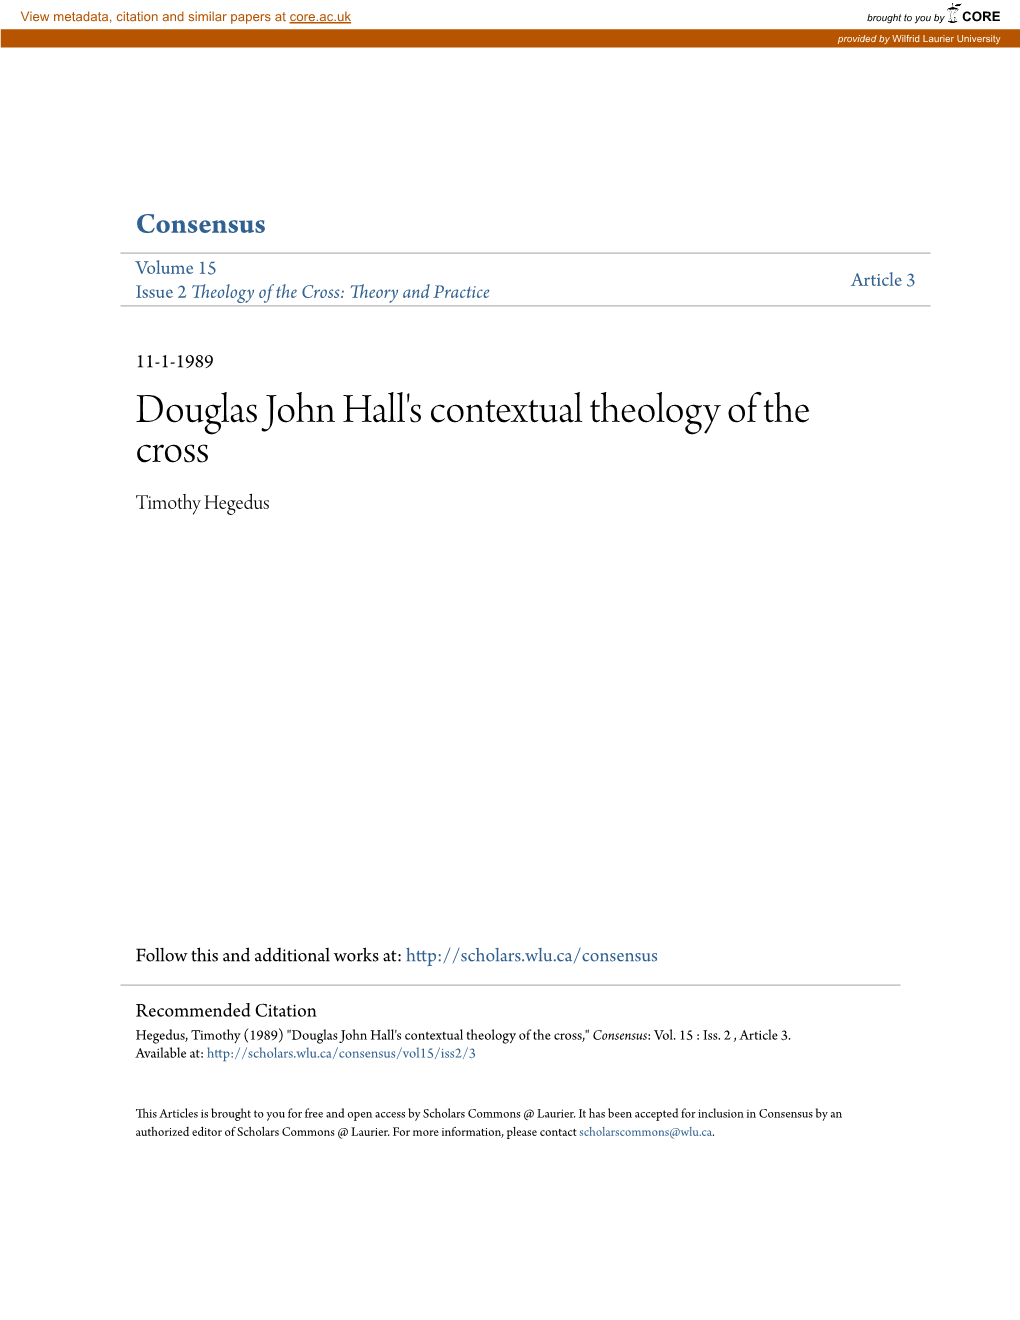 Douglas John Hall's Contextual Theology of the Cross Timothy Hegedus